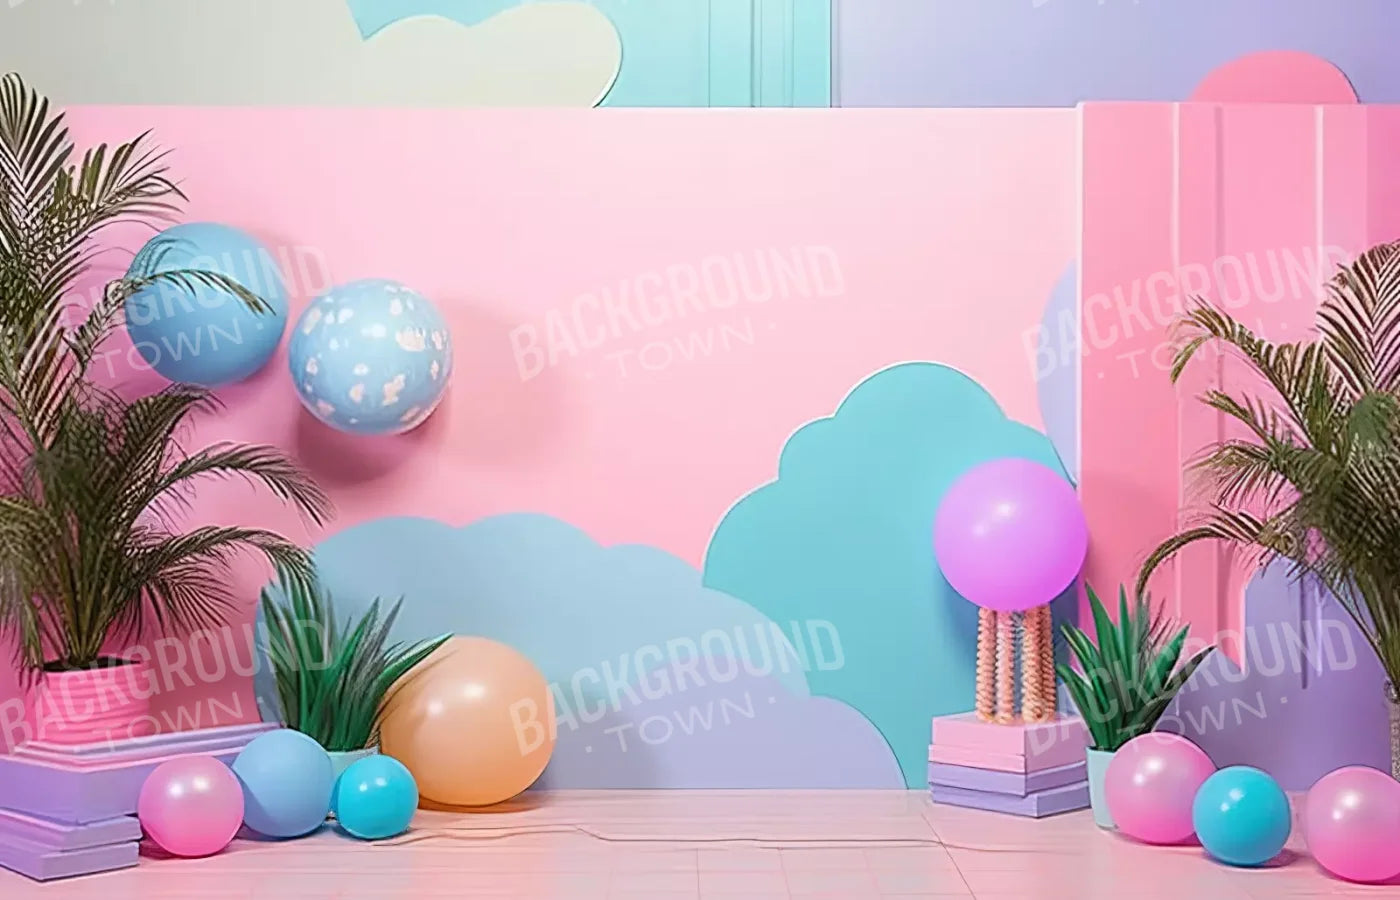 Pink Play House Ii 14’X9’ Ultracloth (168 X 108 Inch) Backdrop